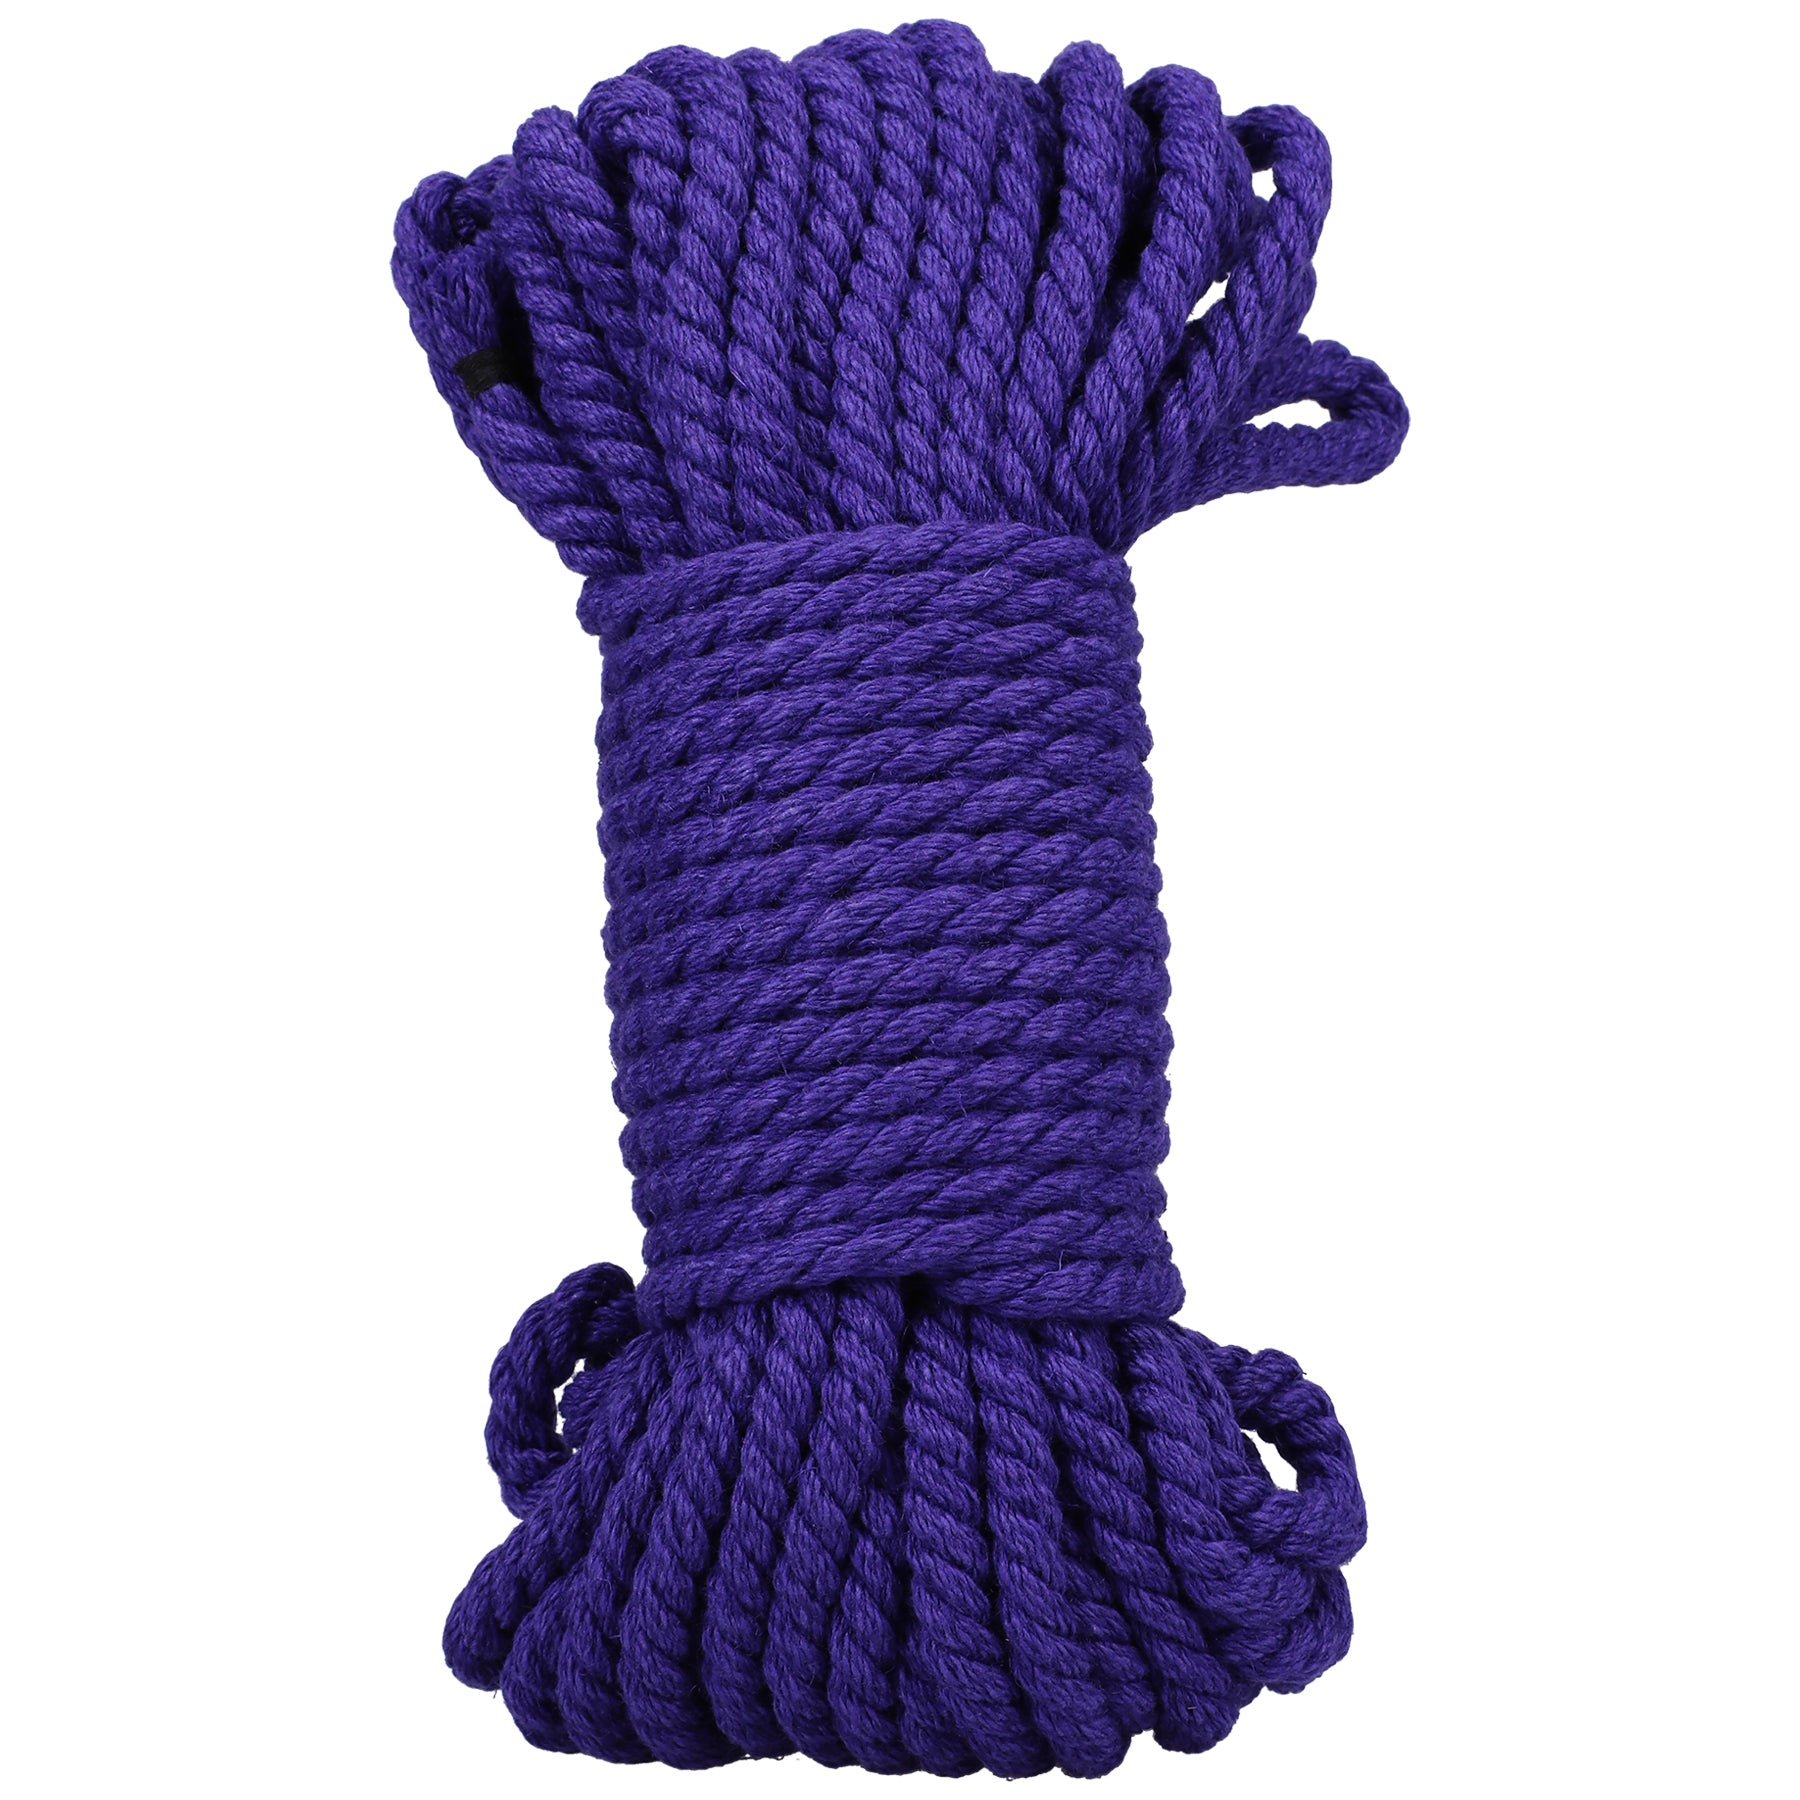 Merci - Bind and Tie - 6mm Hemp Bondage Rope - 50 Feet - Violet-2